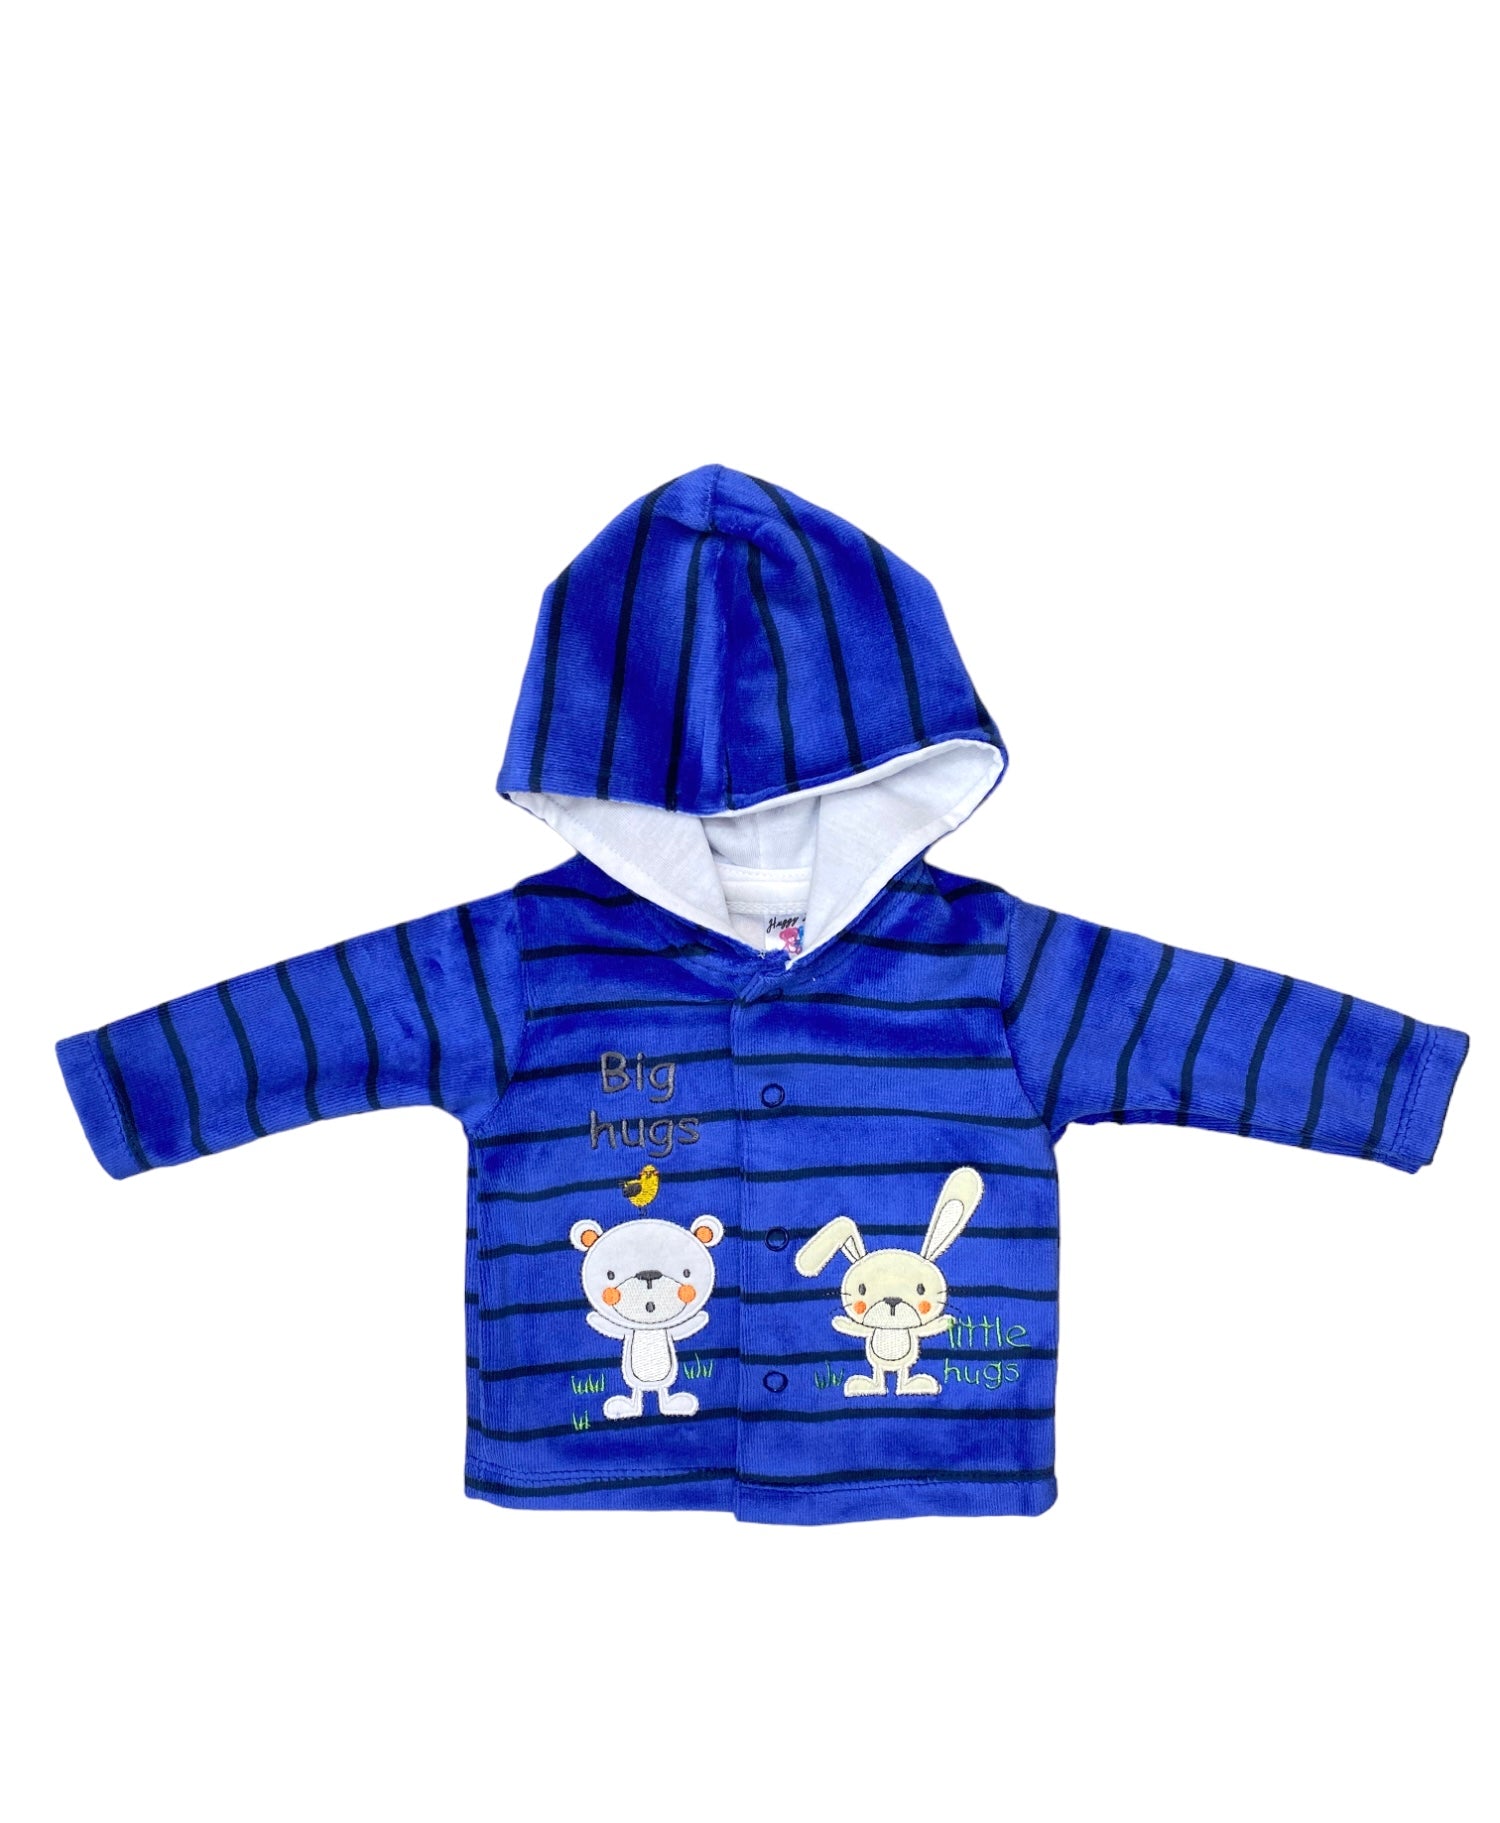 3PC Baby Boy Blue Fleece Suit